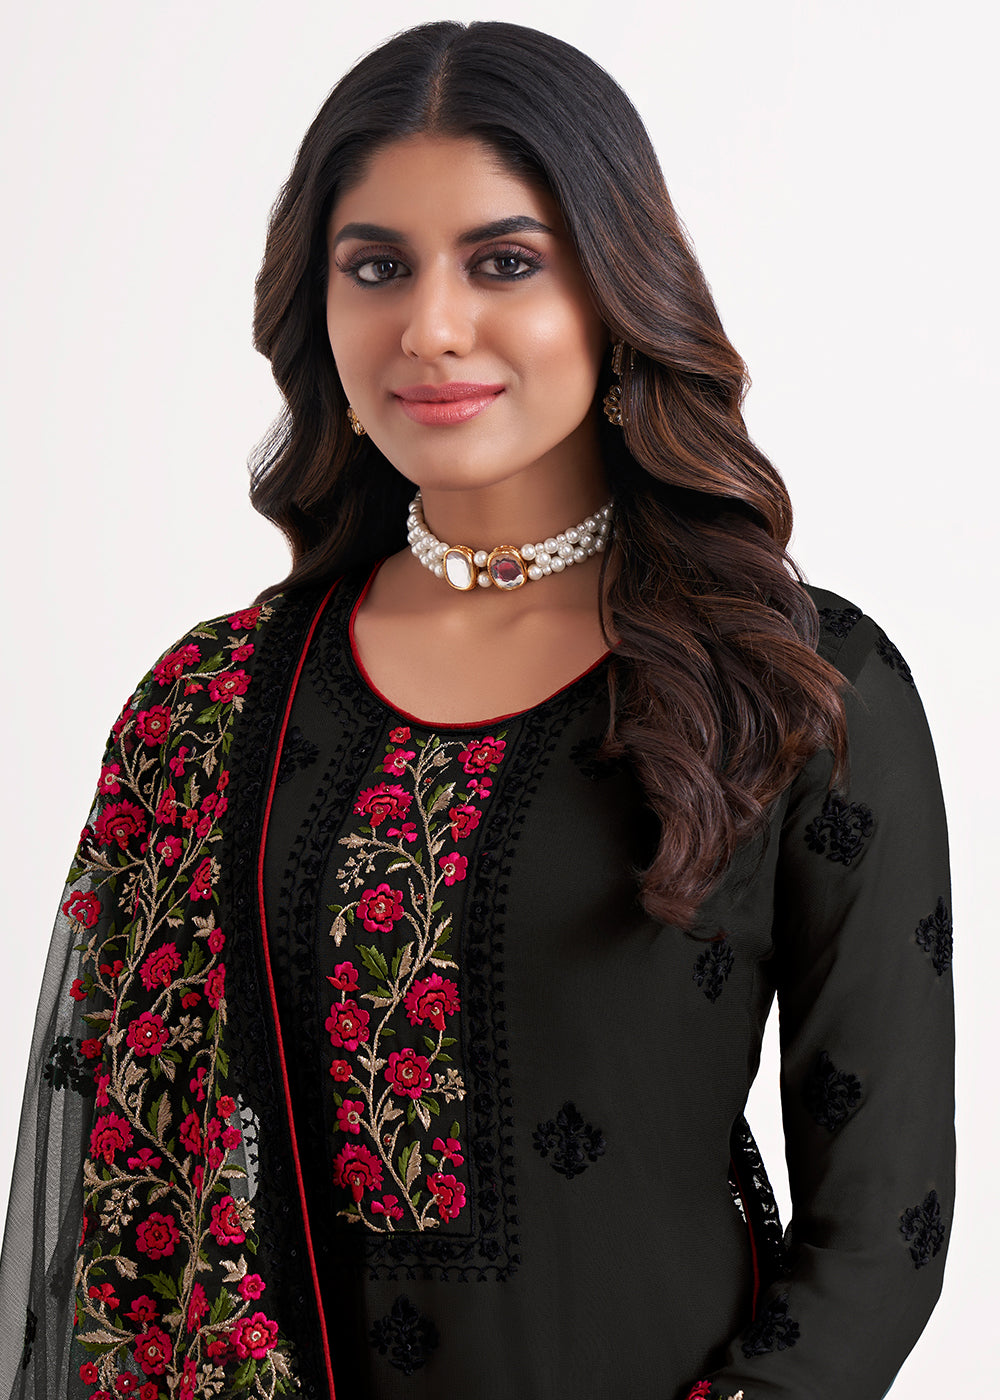 Buy Now Fancy Stunning Black Eid Festive Salwar Suit Online in USA, UK, Canada, Germany, Australia & Worldwide at Empress Clothing.